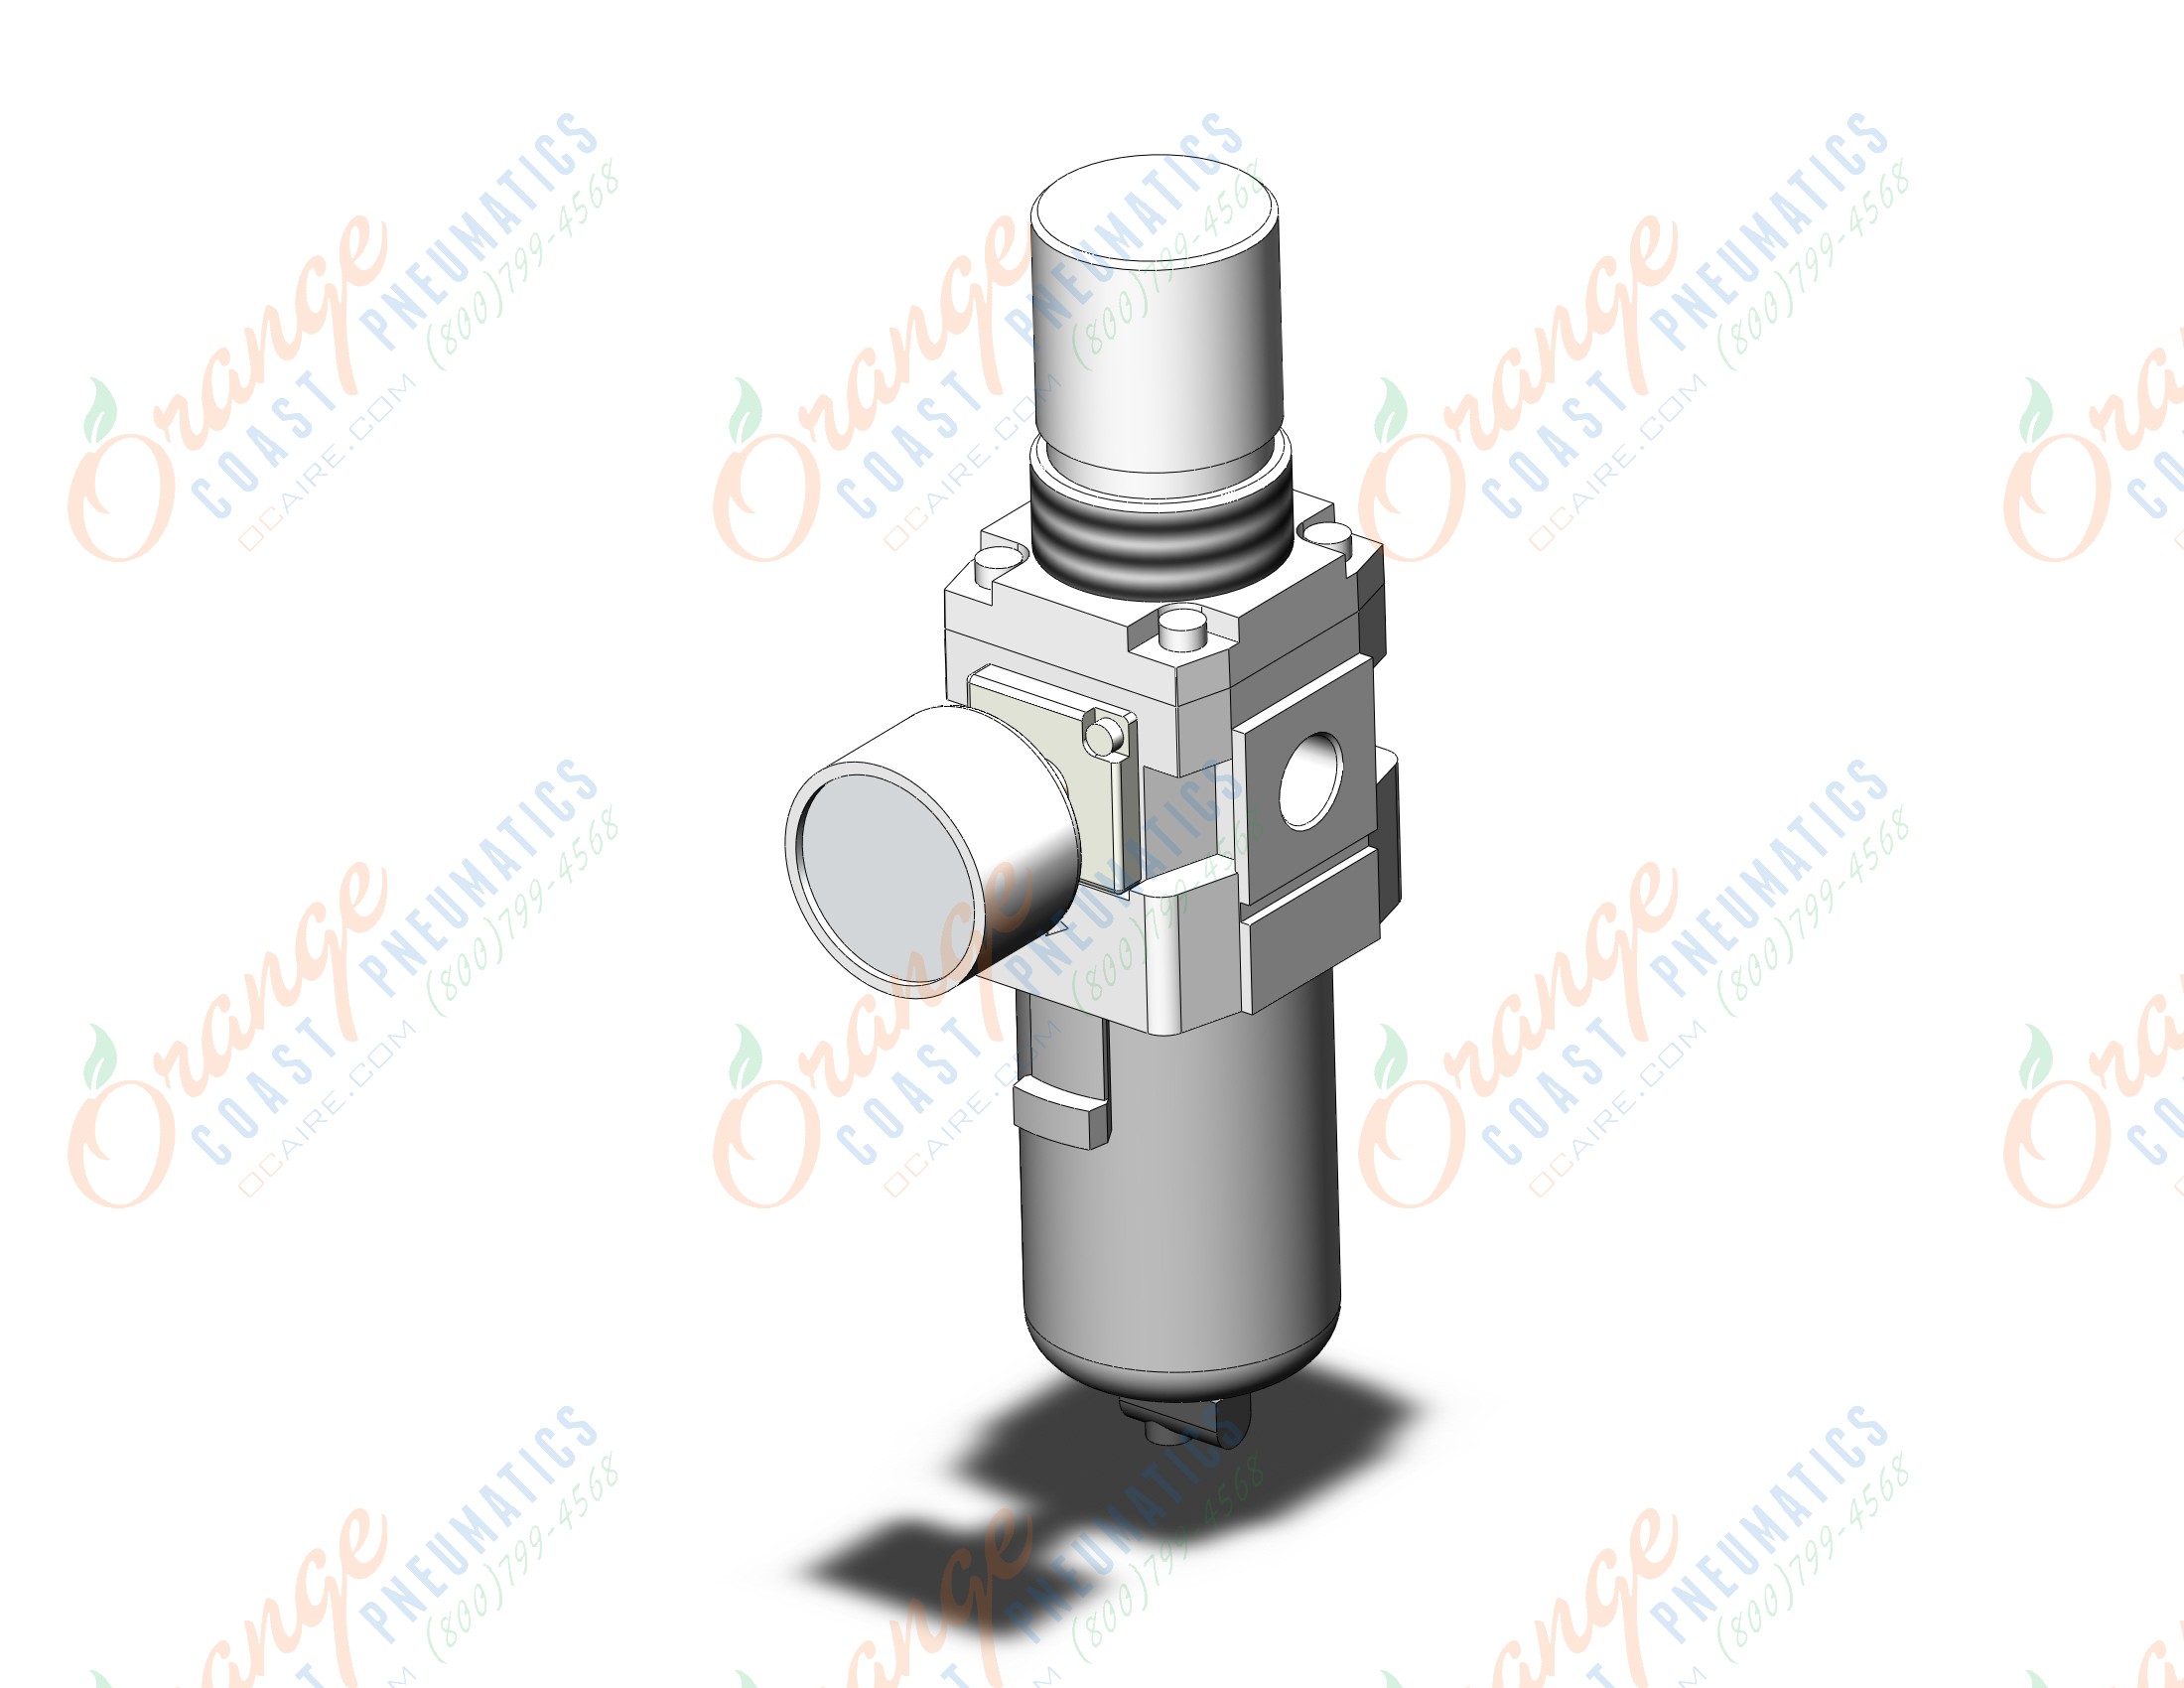 SMC AW30K-N02G-1Z-B filter/regulator, FILTER/REGULATOR, MODULAR F.R.L.